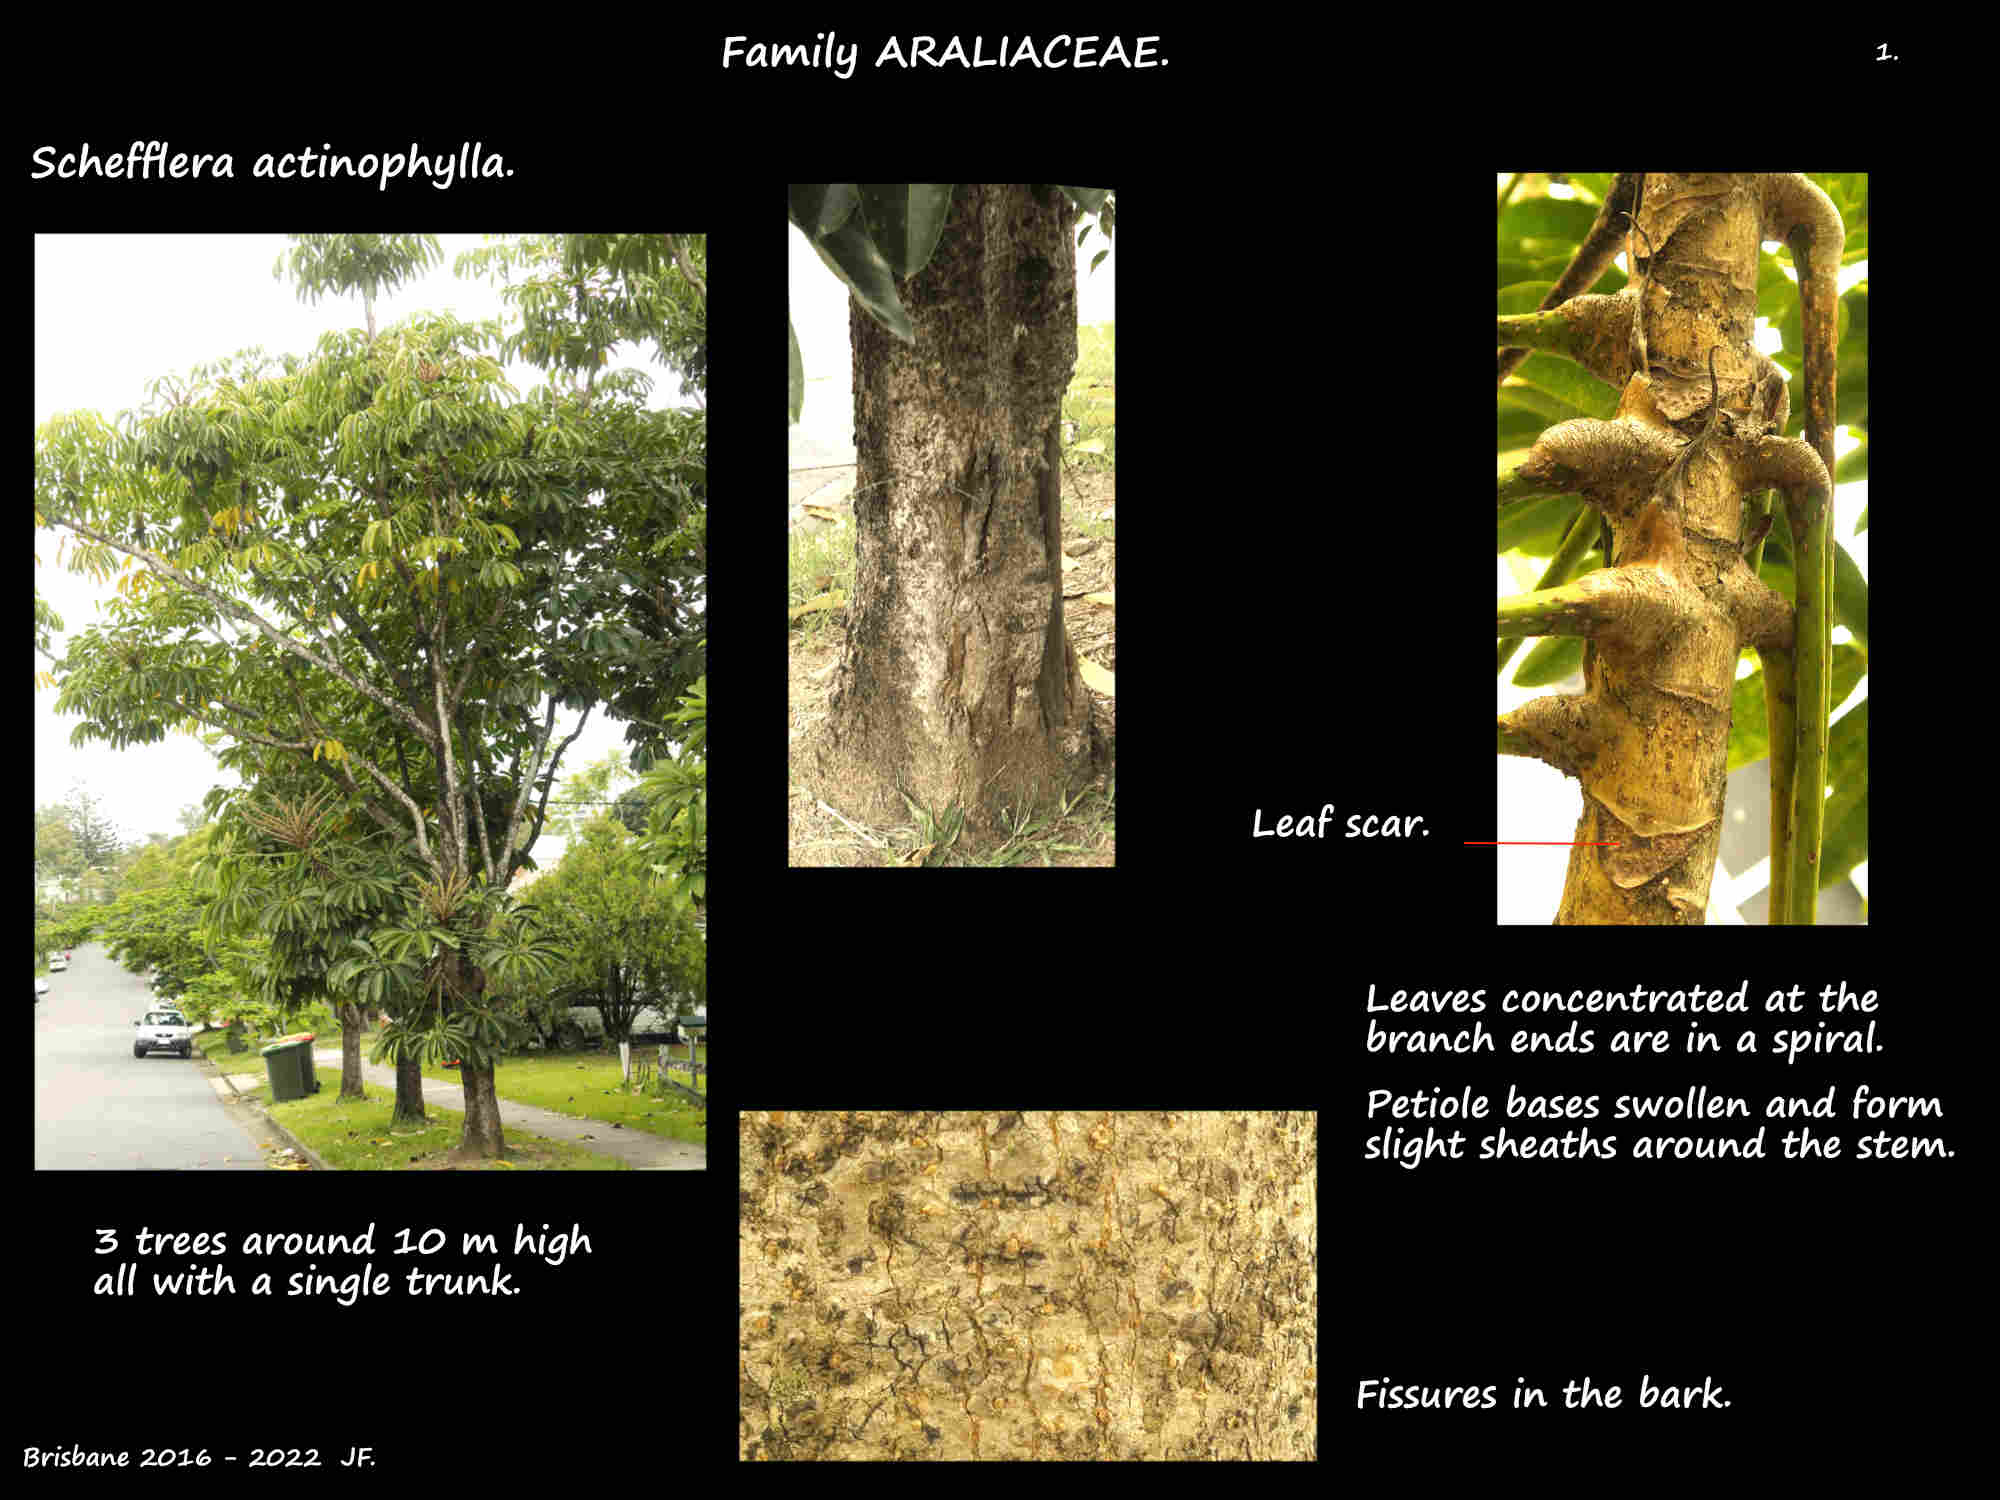 1 Schefflera actinophylla trees & bark